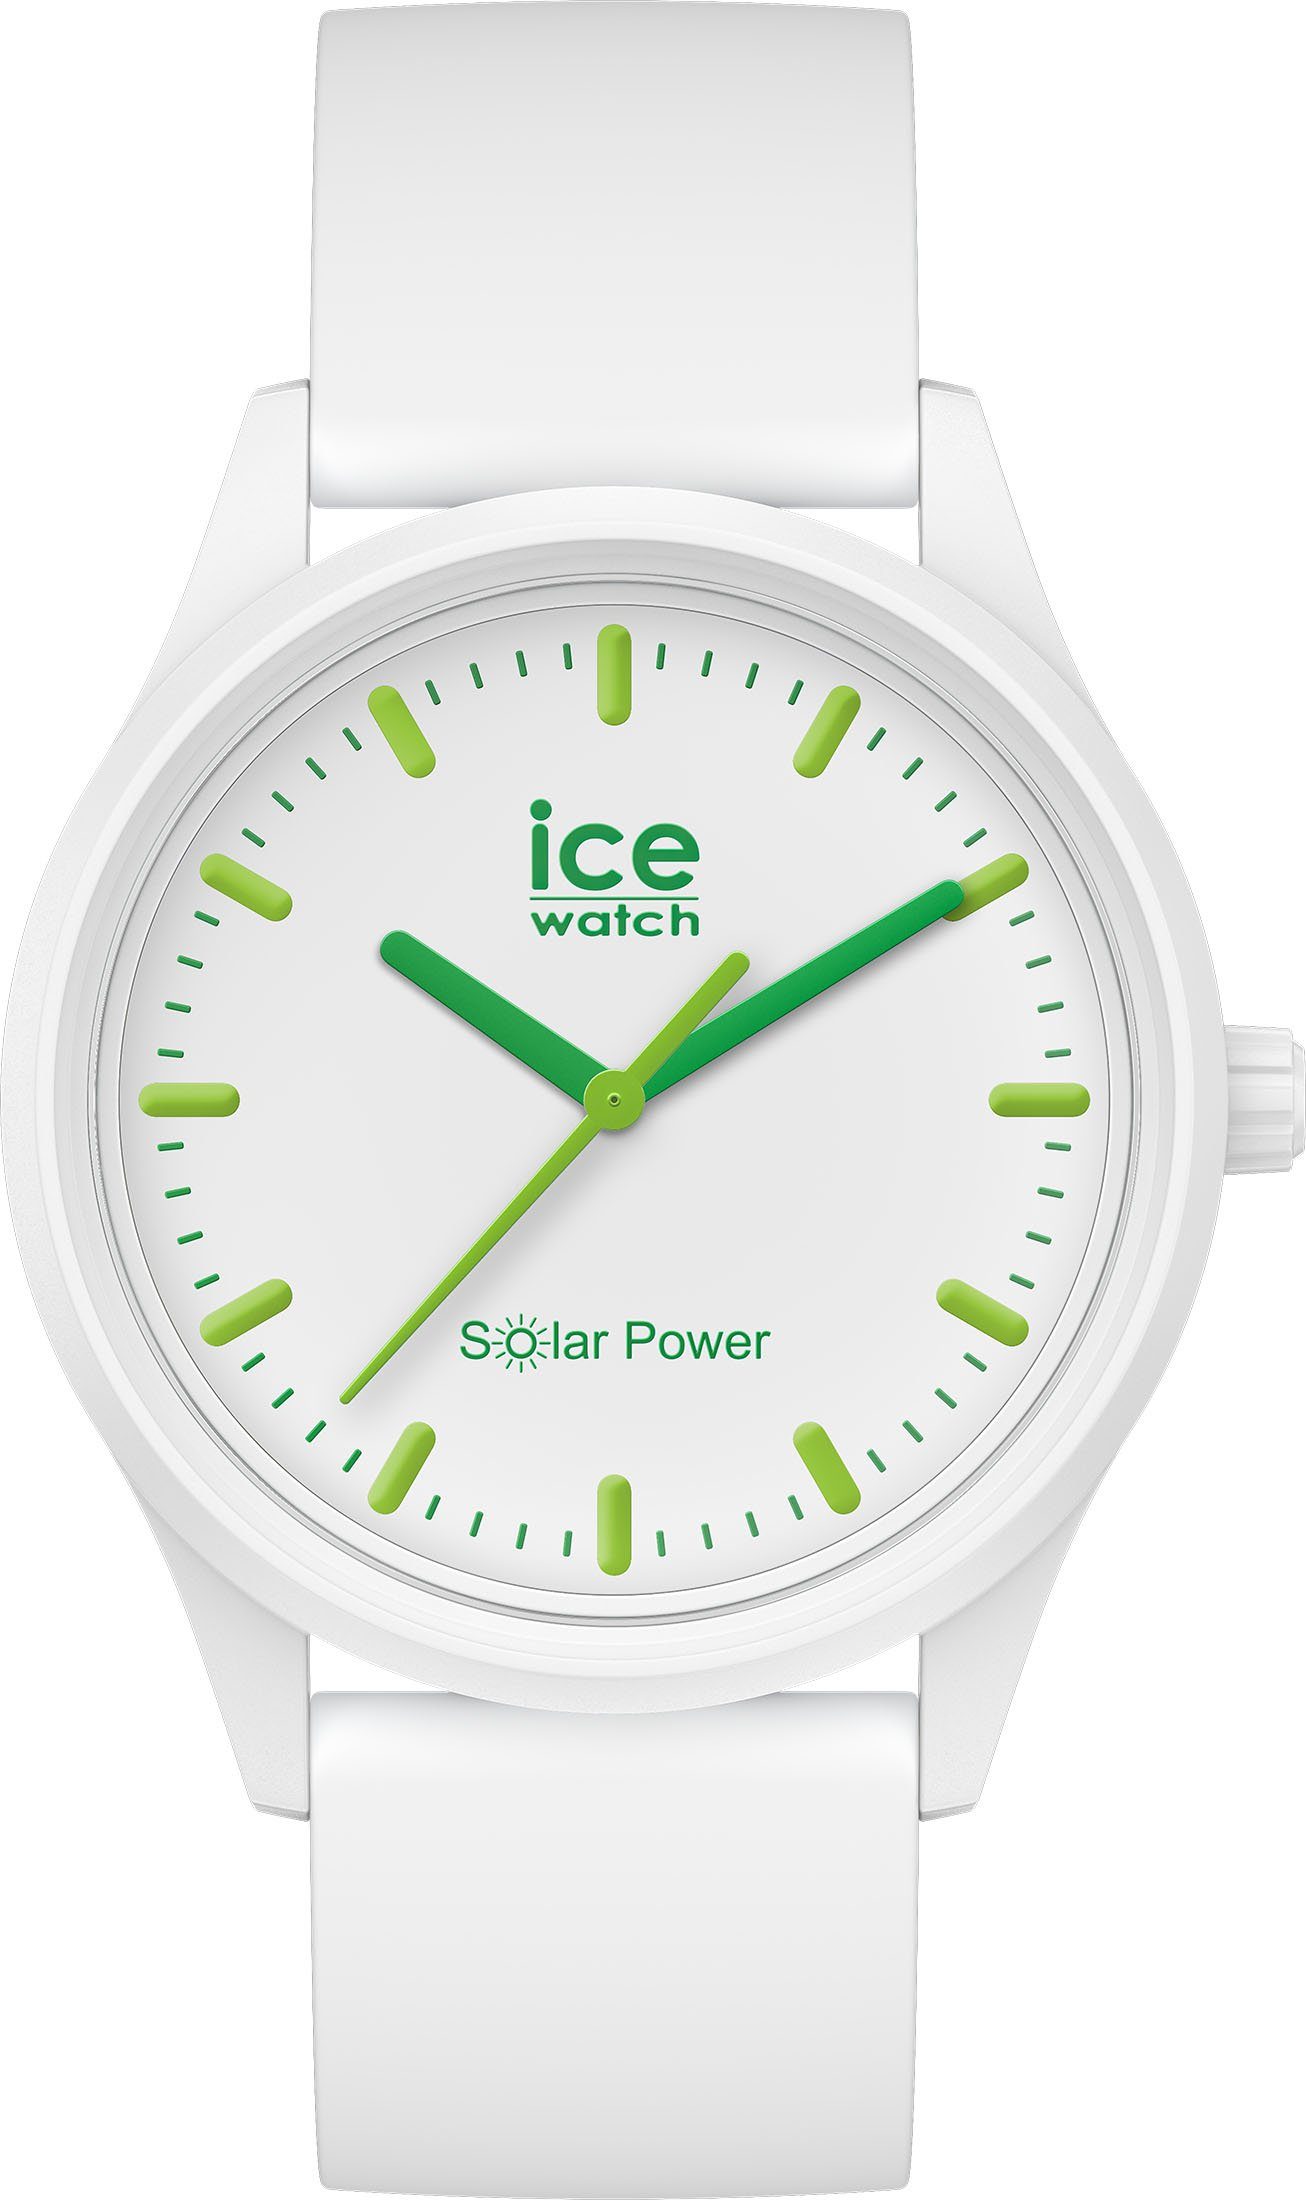 power, Solaruhr weiß/grün ICE 017762 ice-watch solar